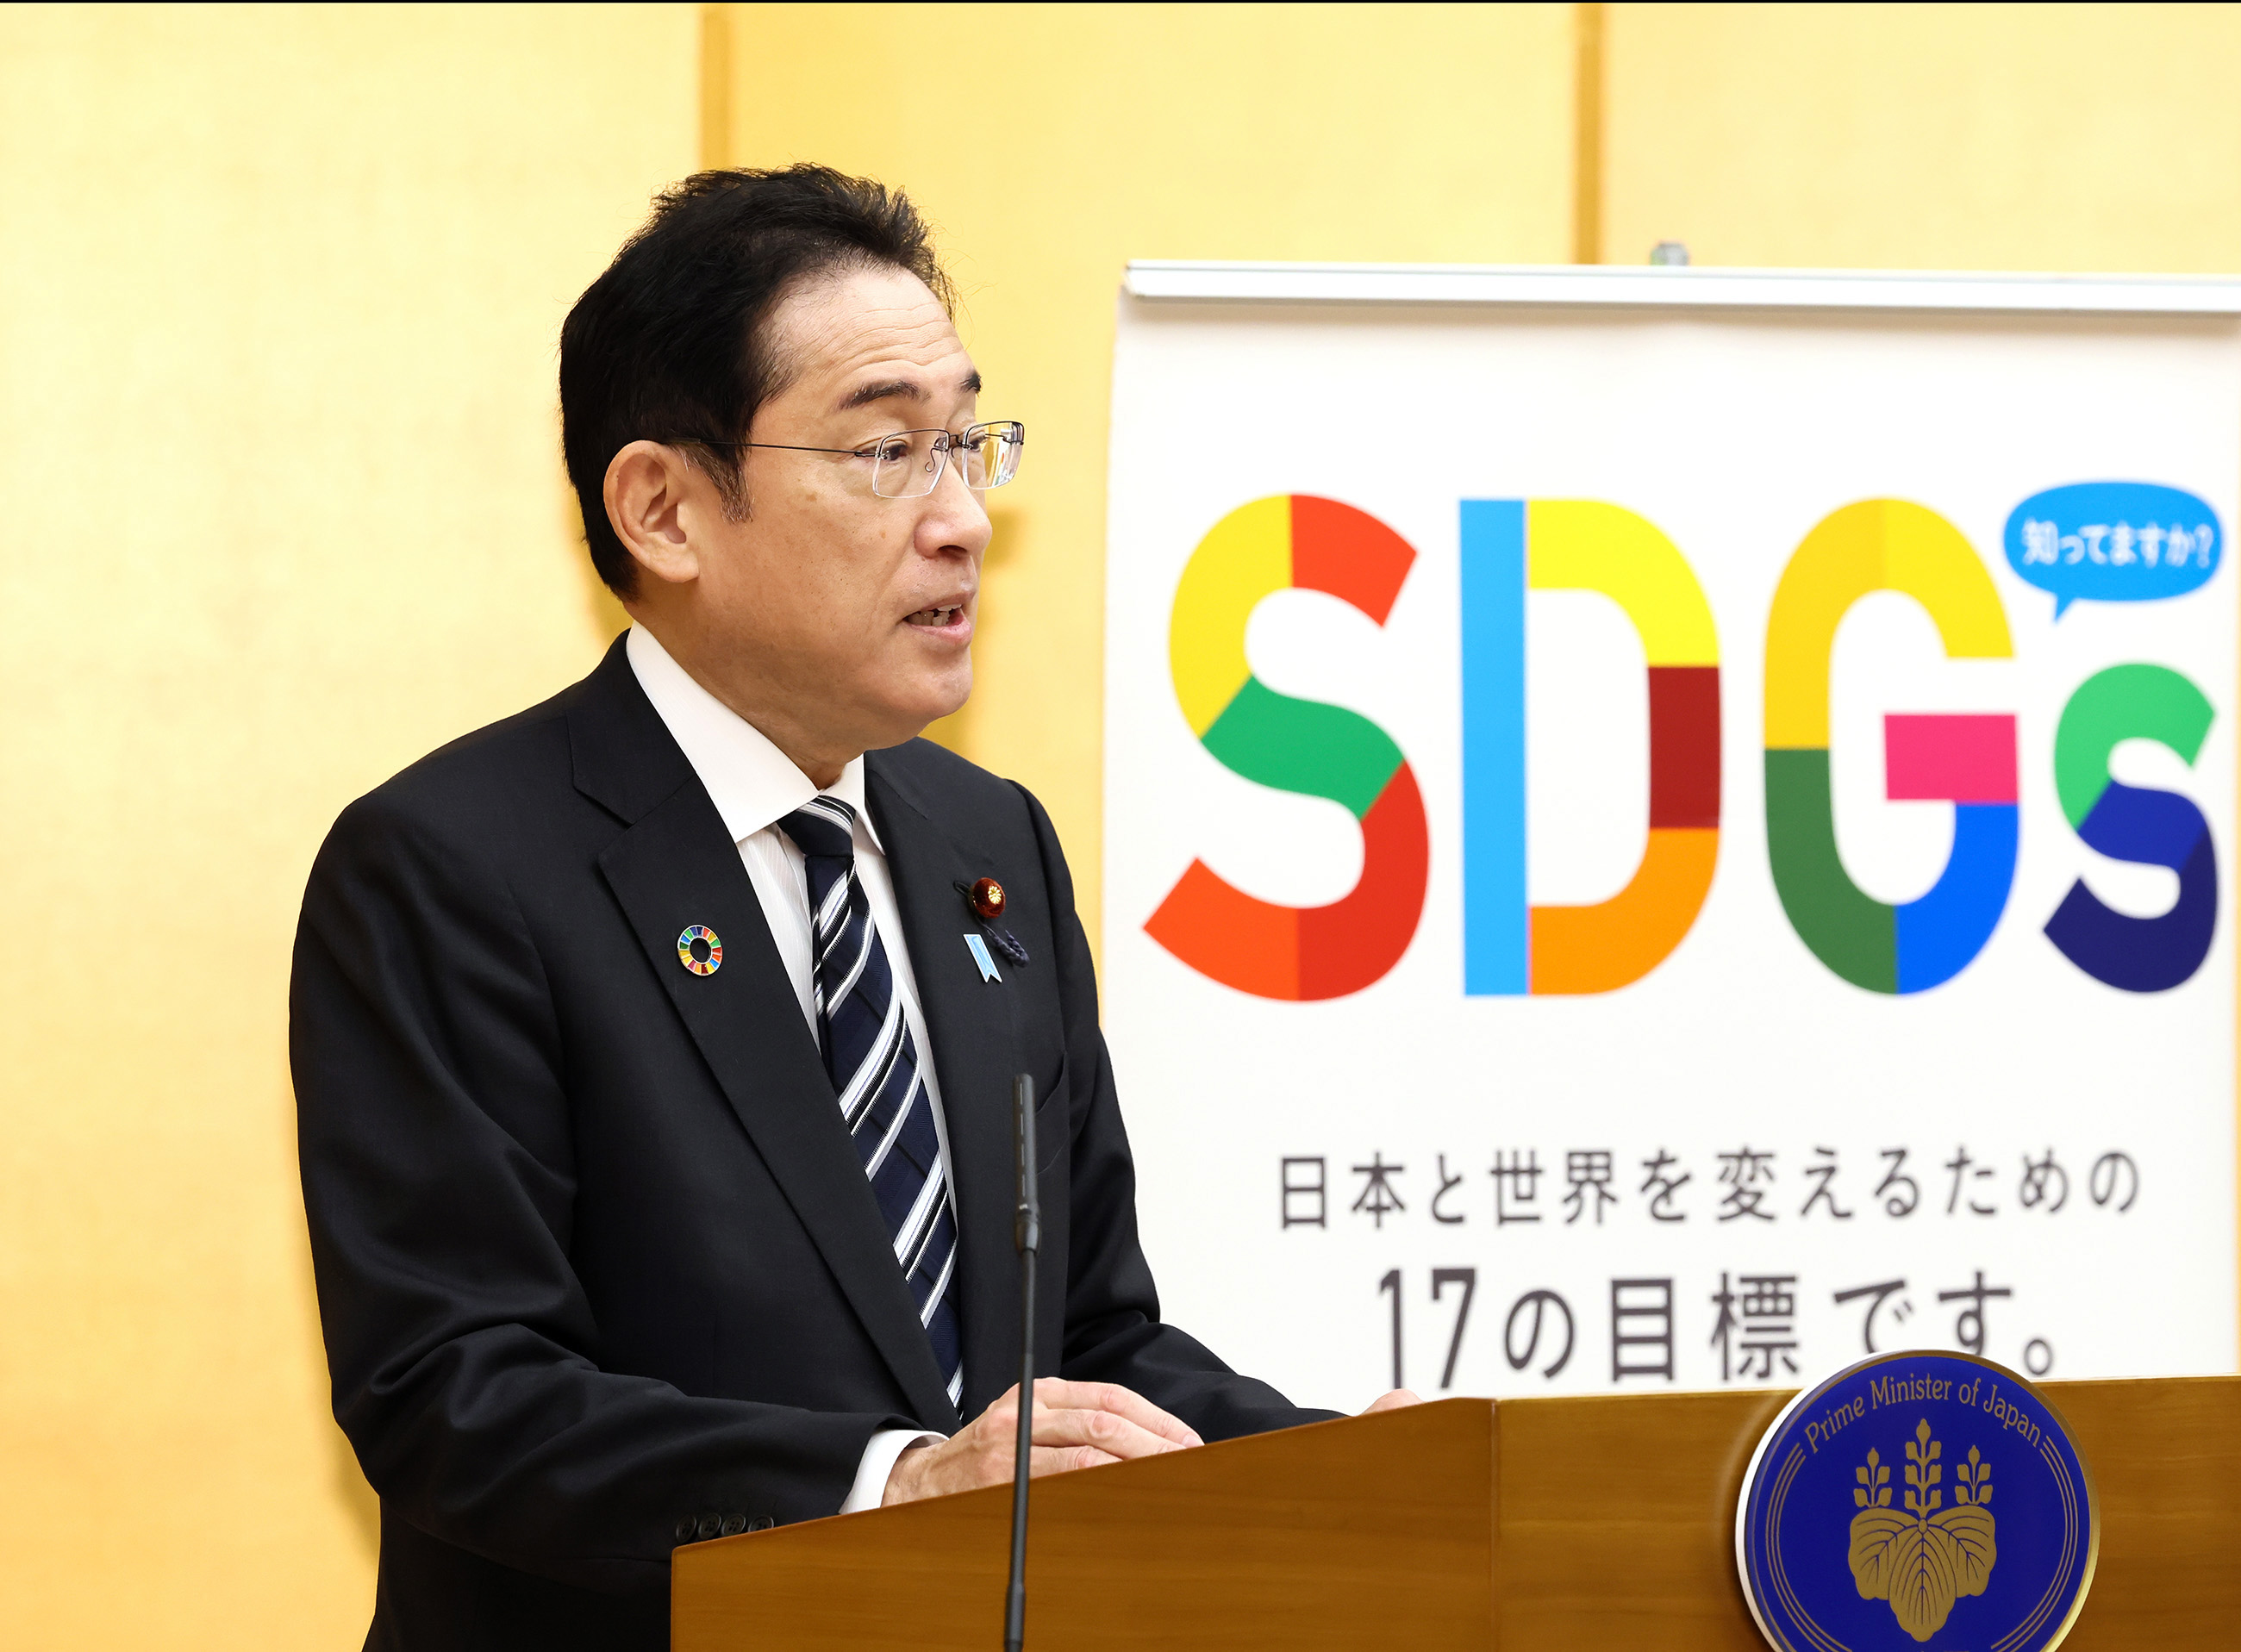 Conferment Ceremony for the Japan SDGs Award